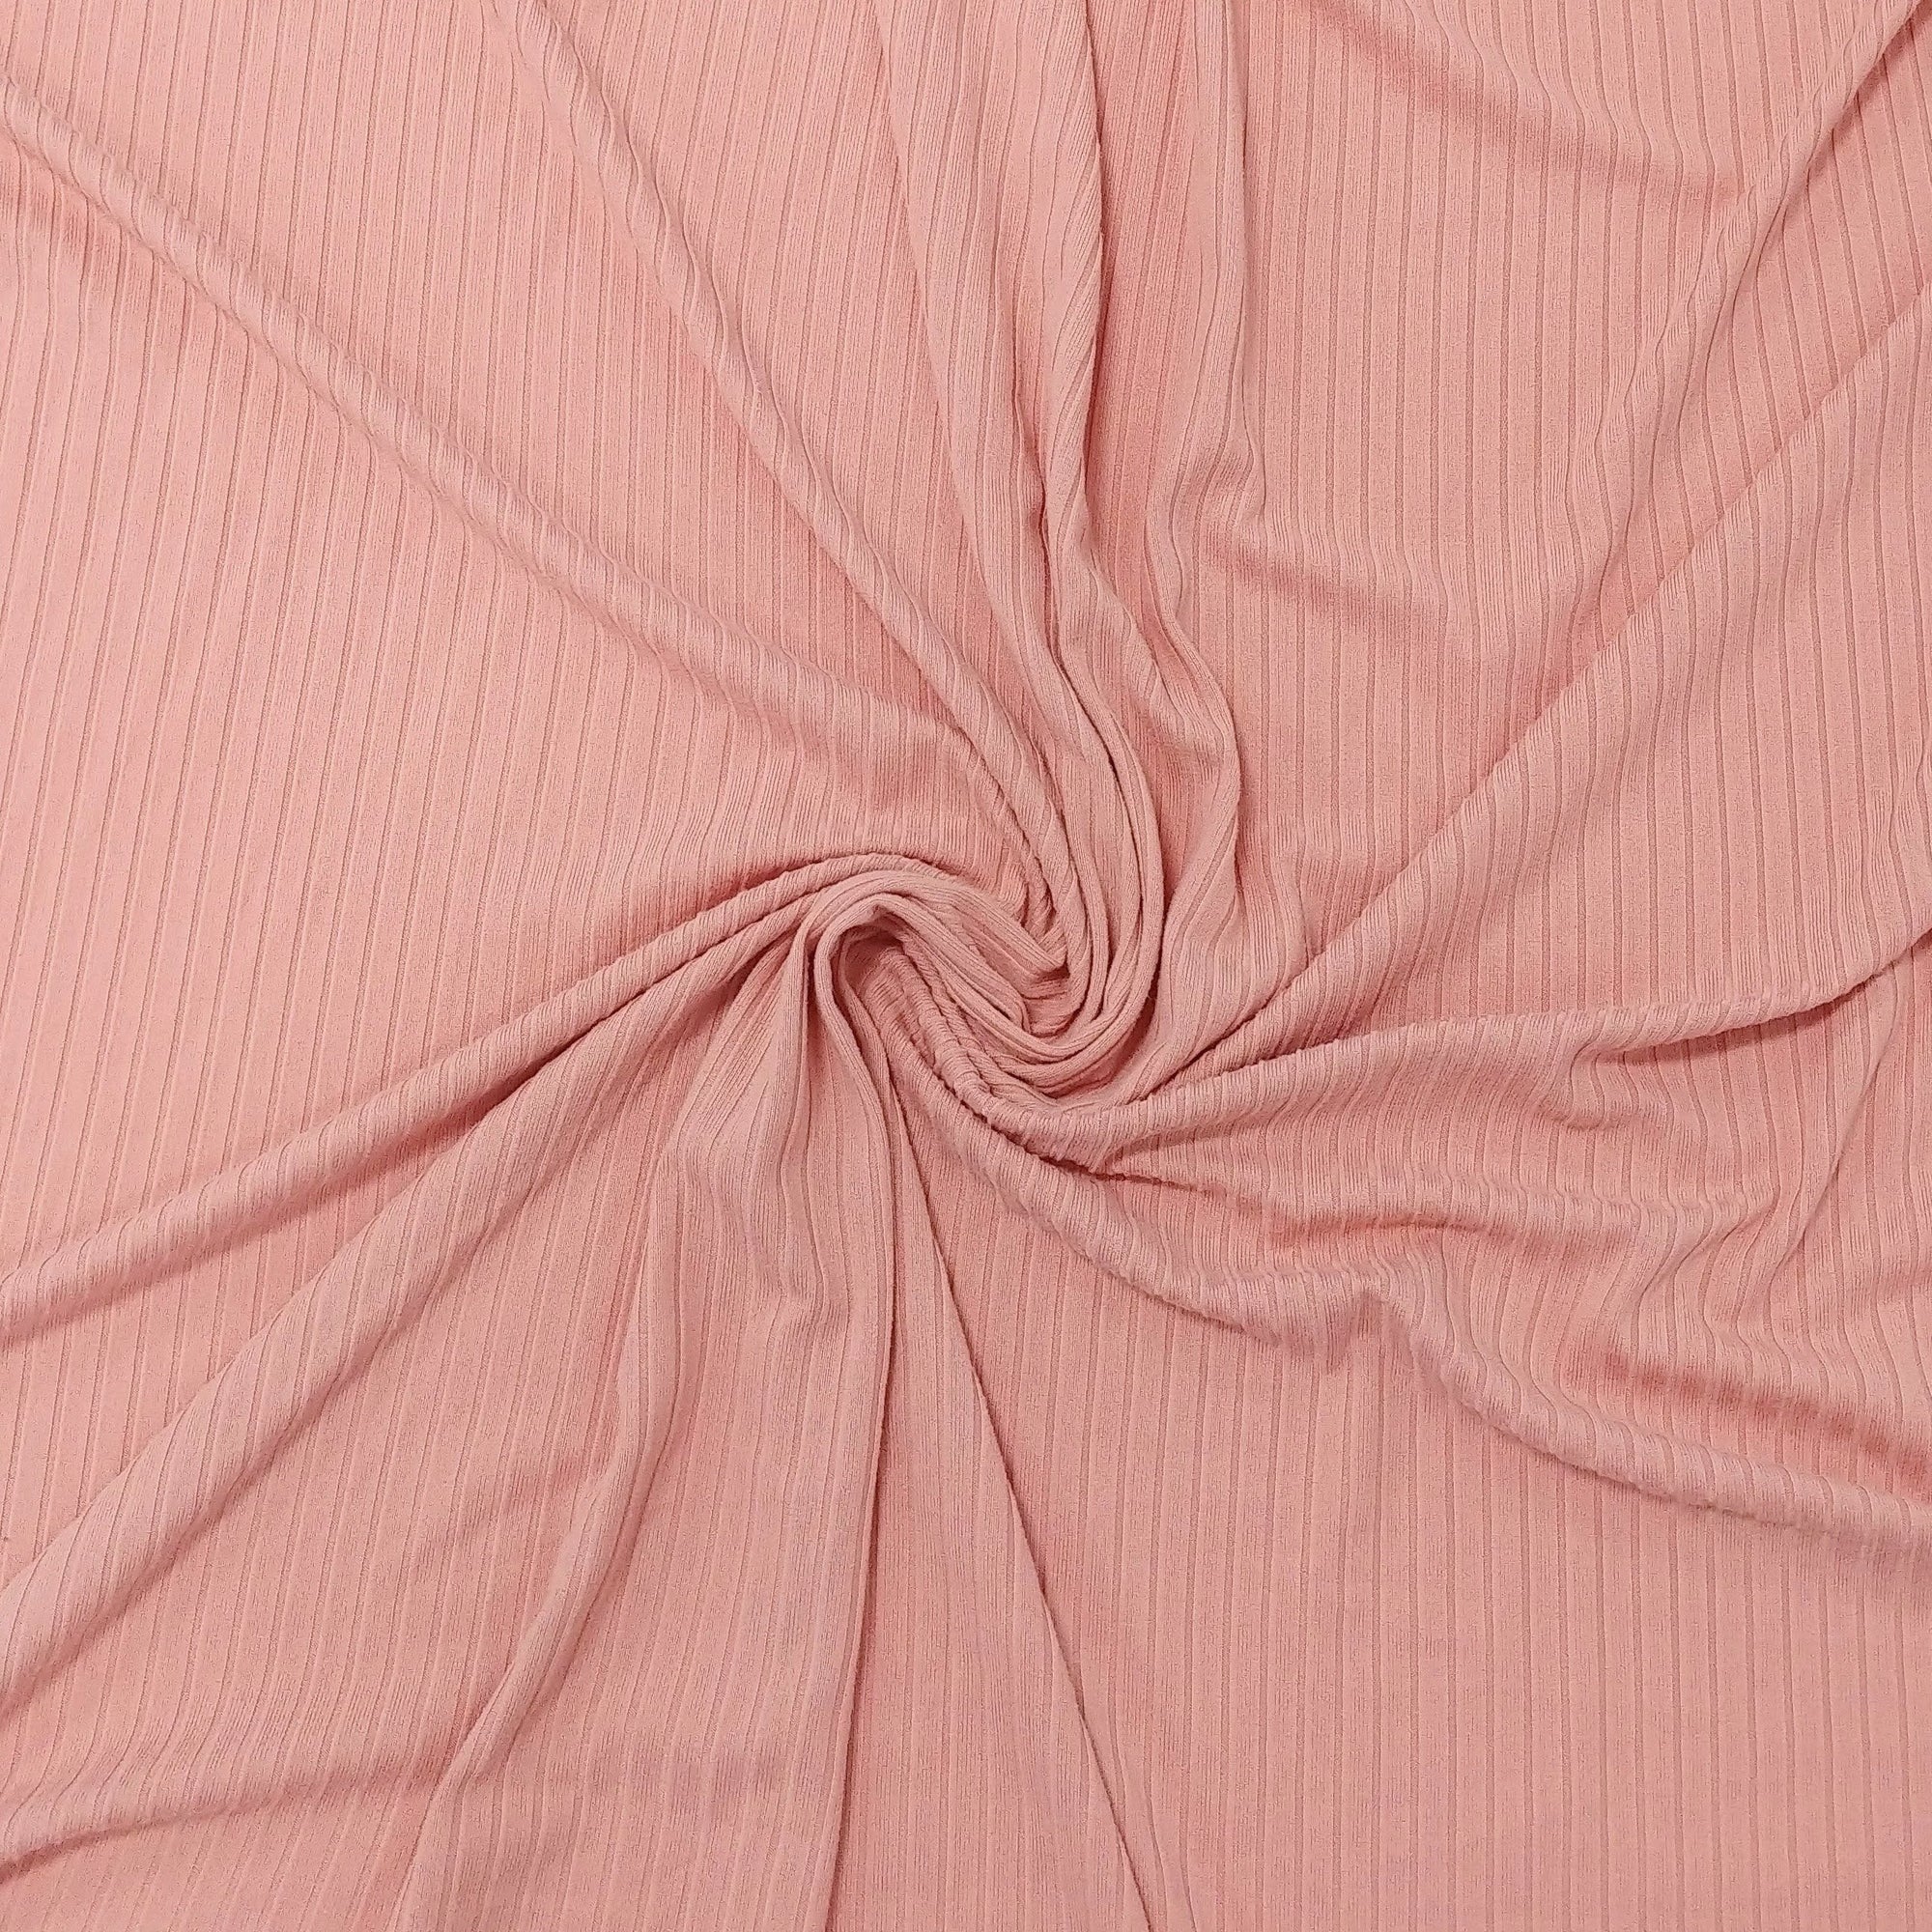 Solid Blush Pink Poly Spandex 4 Way Stretch 8x3 Rib Knit Fabric, Raspberry Creek Fabrics, watermarked, restored